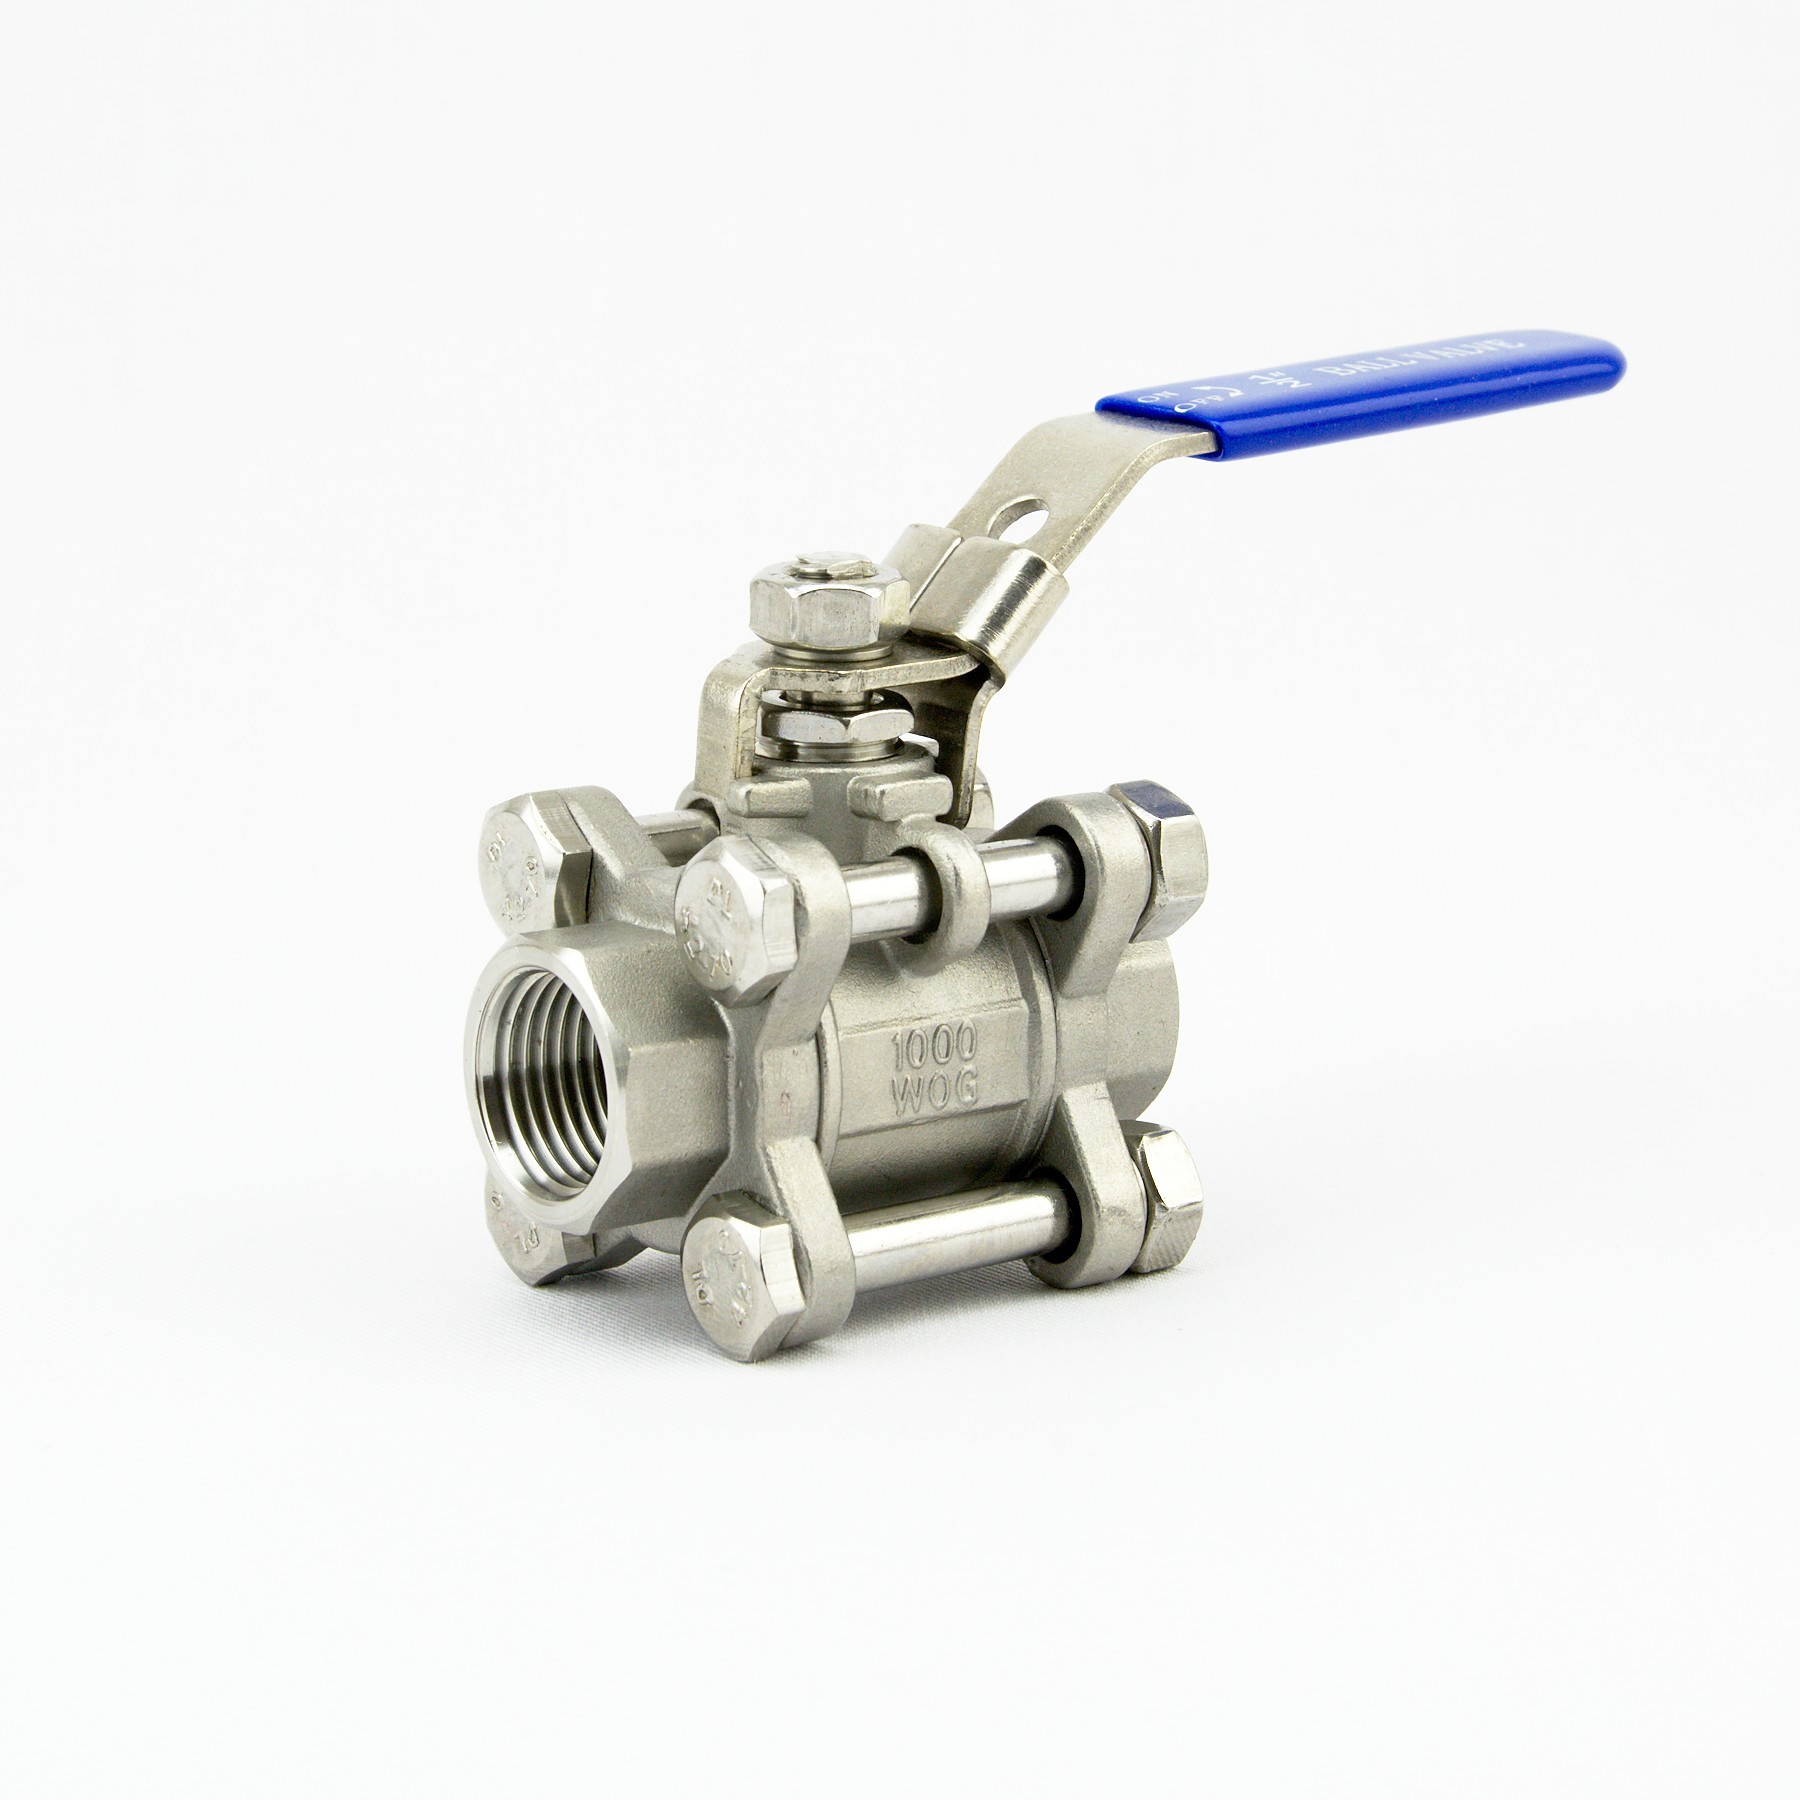 3-piece full bore ball valve with locking handle (1/2" BSP)